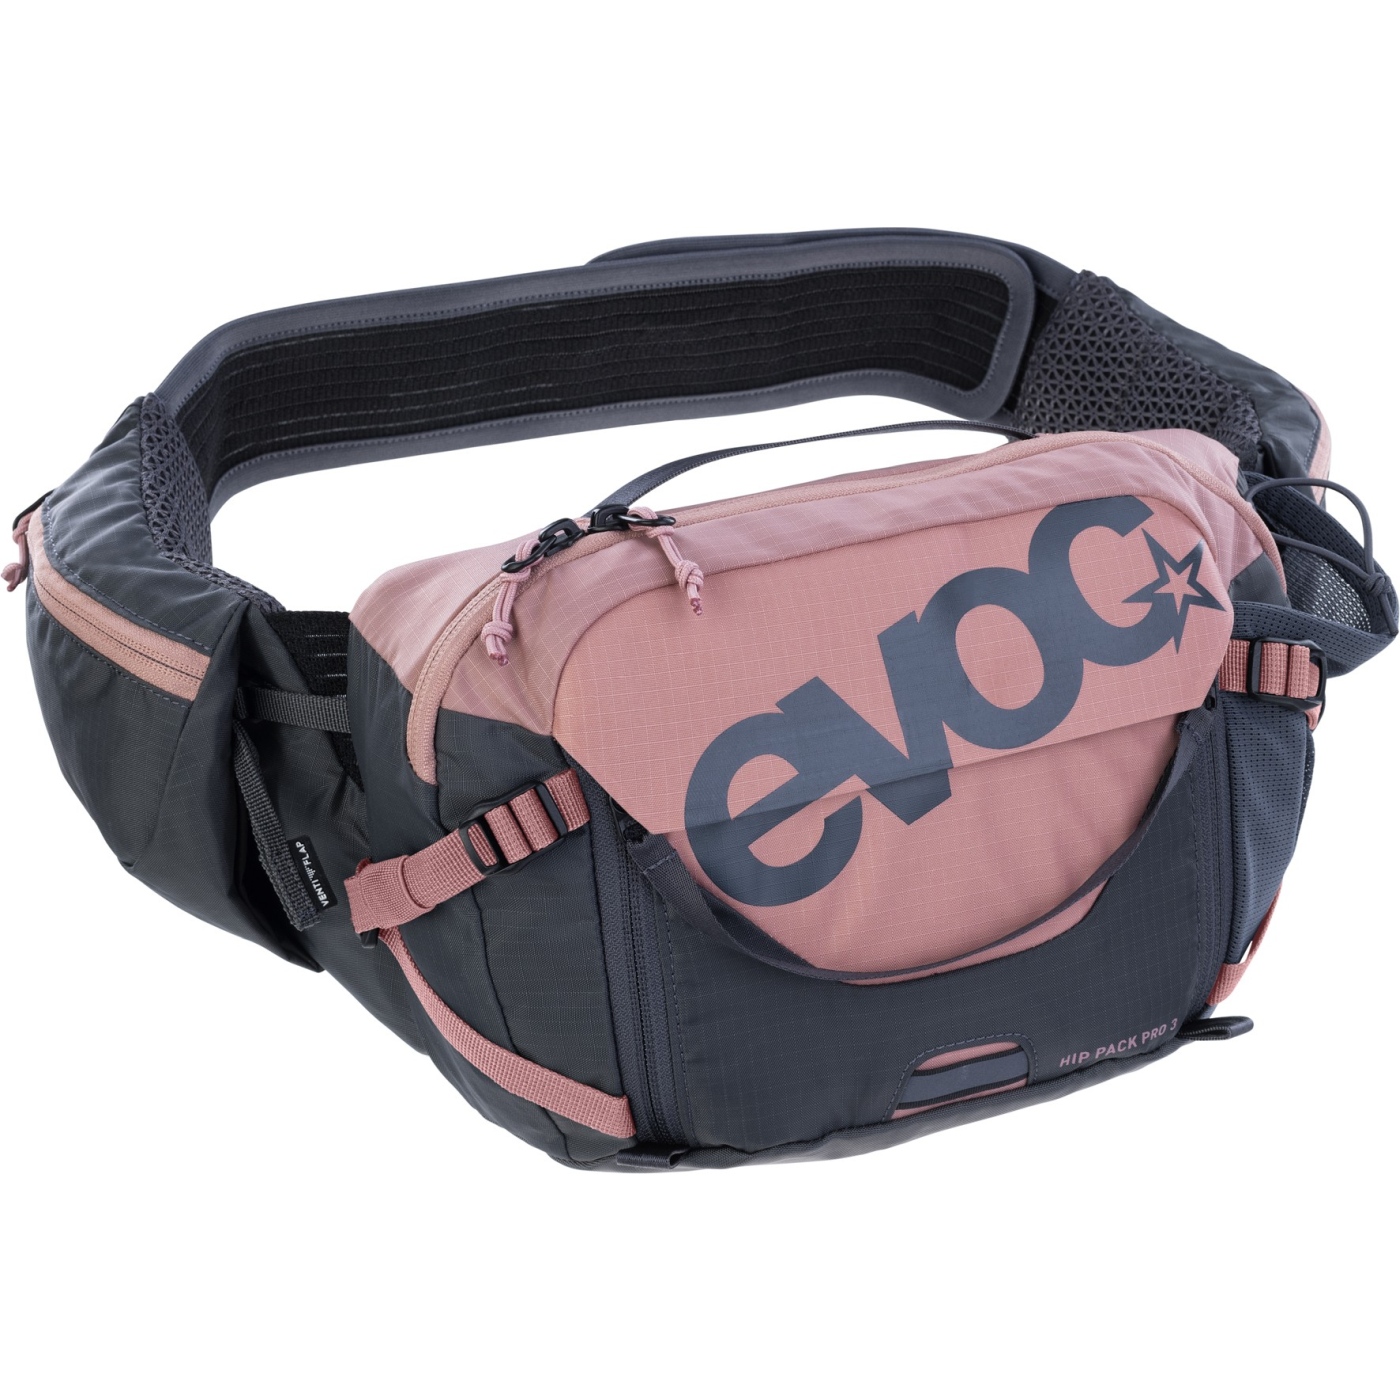 Image of EVOC Hip Pack Pro 3 L + 1.5 L Hydration Bladder - Dusty Pink - Carbon Grey